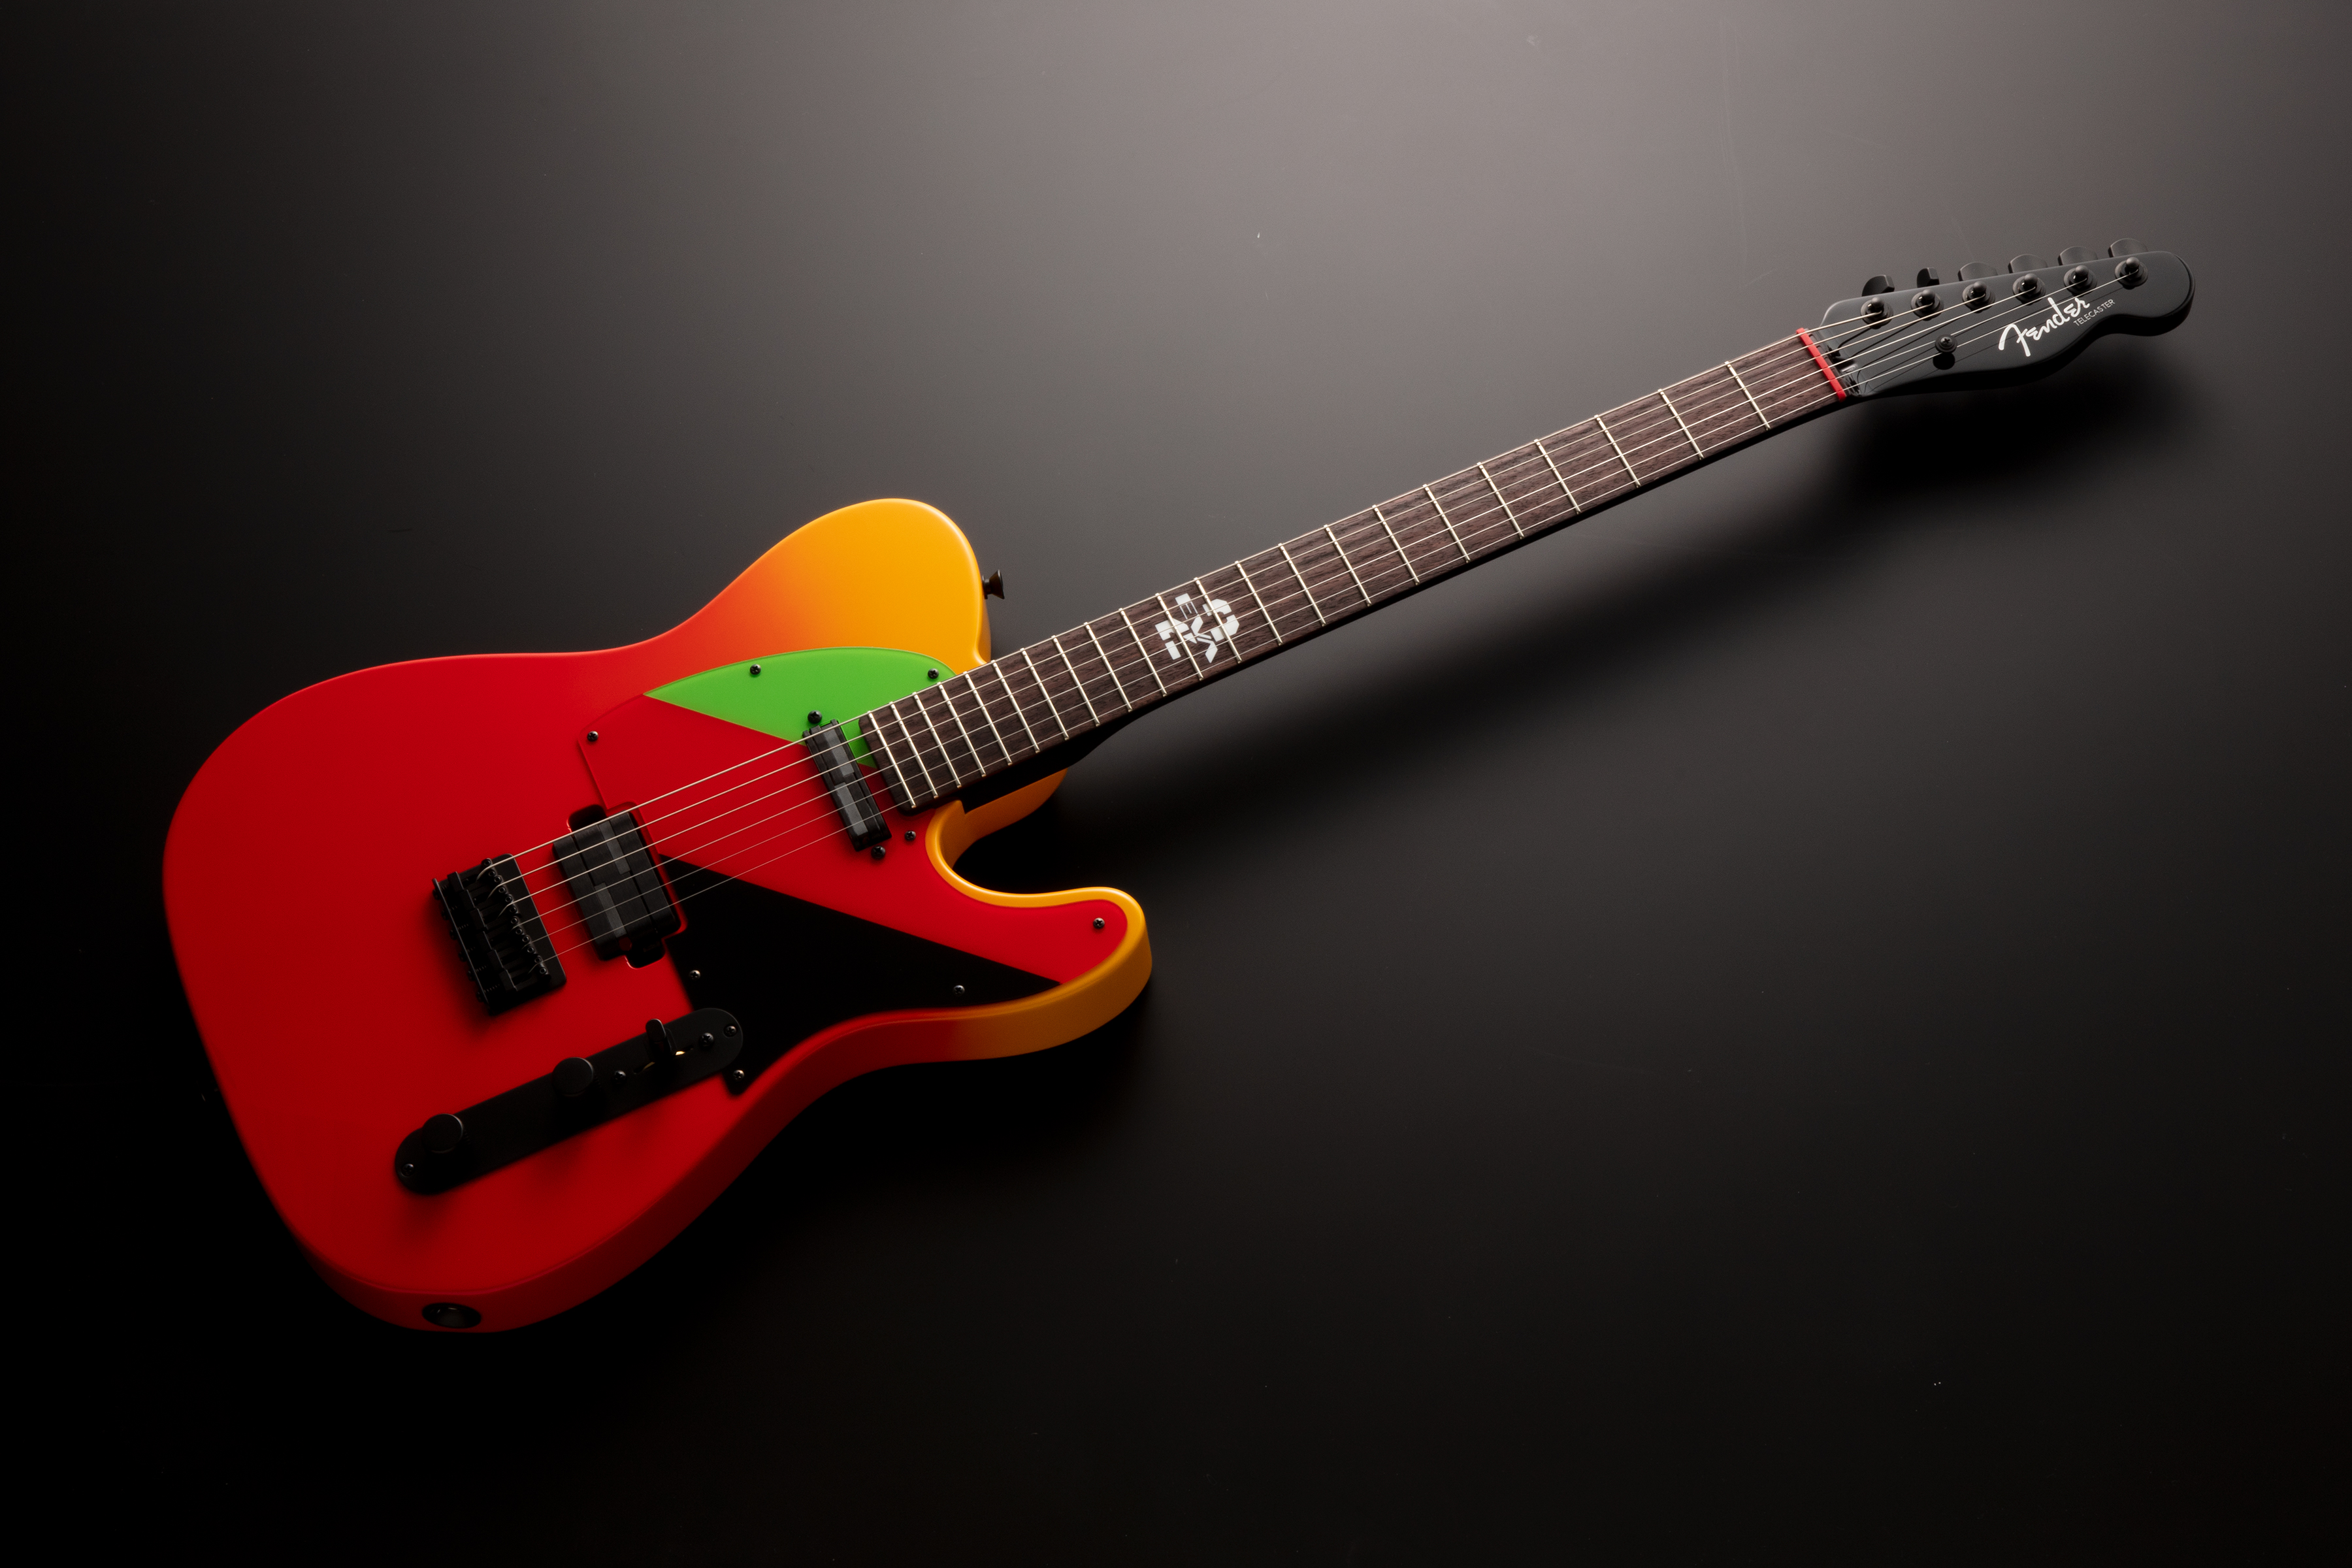 *Fender 2020 EVANGELION ASUKA TELECASTER 発売 2013年にスタートした、Fender x ASUKA Telecasterプロジェクト。遂に上映となる「シン・エヴァンゲリオン劇場版」の公開を記念し、2020年内の数量限定生産となる日本製モデルが、満を持しての […]